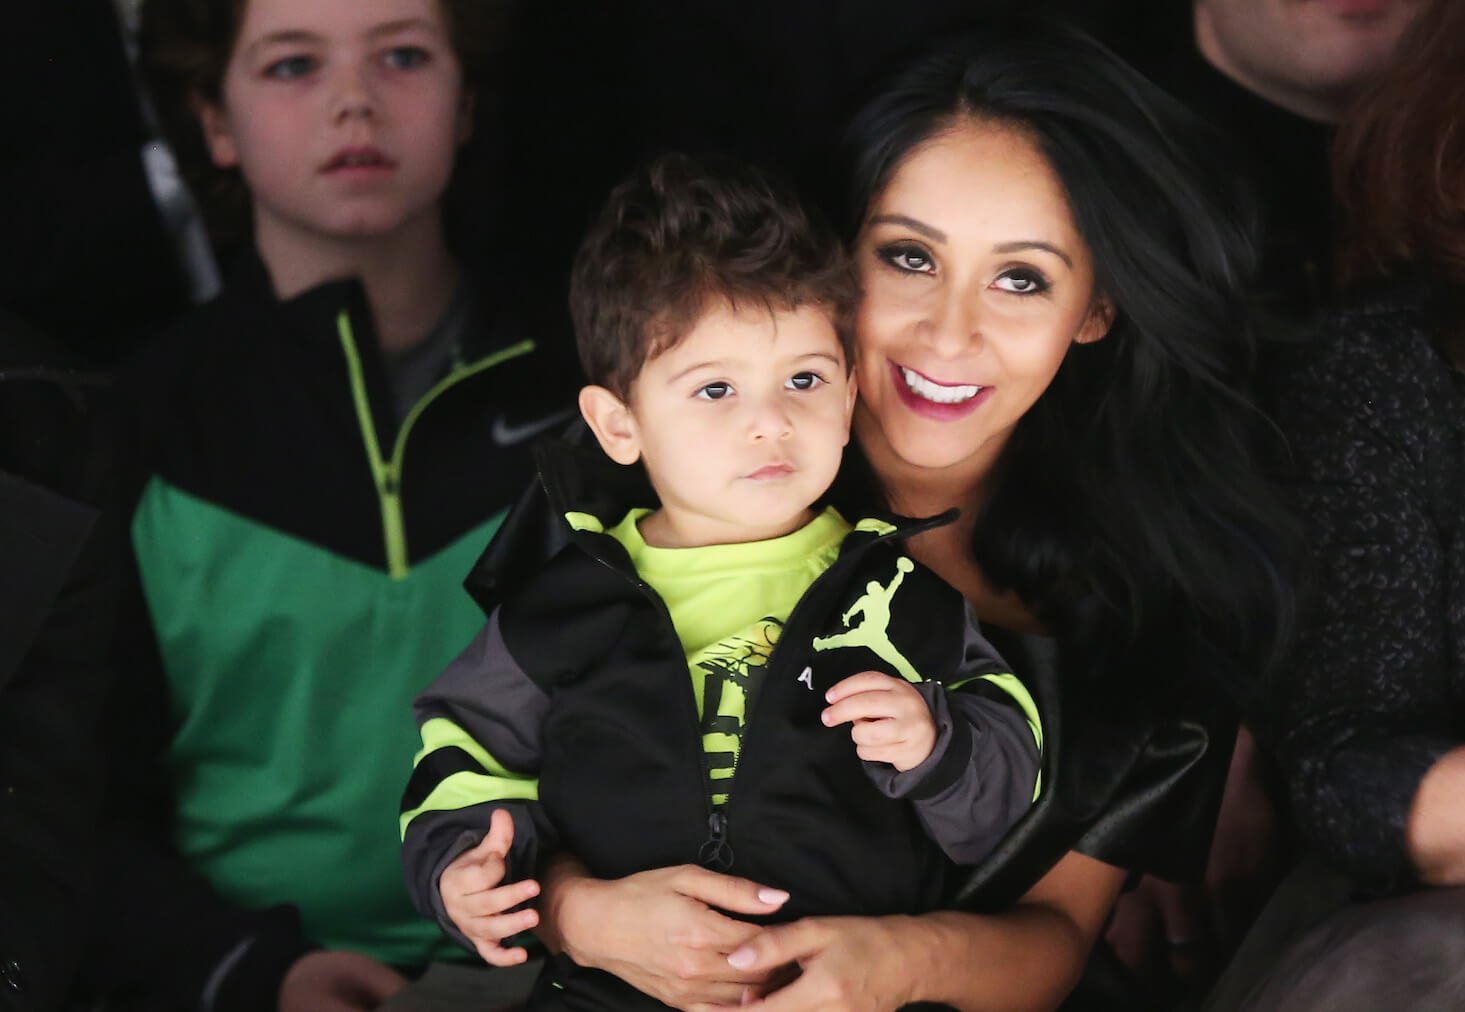 'Jersey Shore: Family Vacation' Season 7 star Nicole 'Snooki' Polizzi holding her son, Lorenzo, at a fashion show